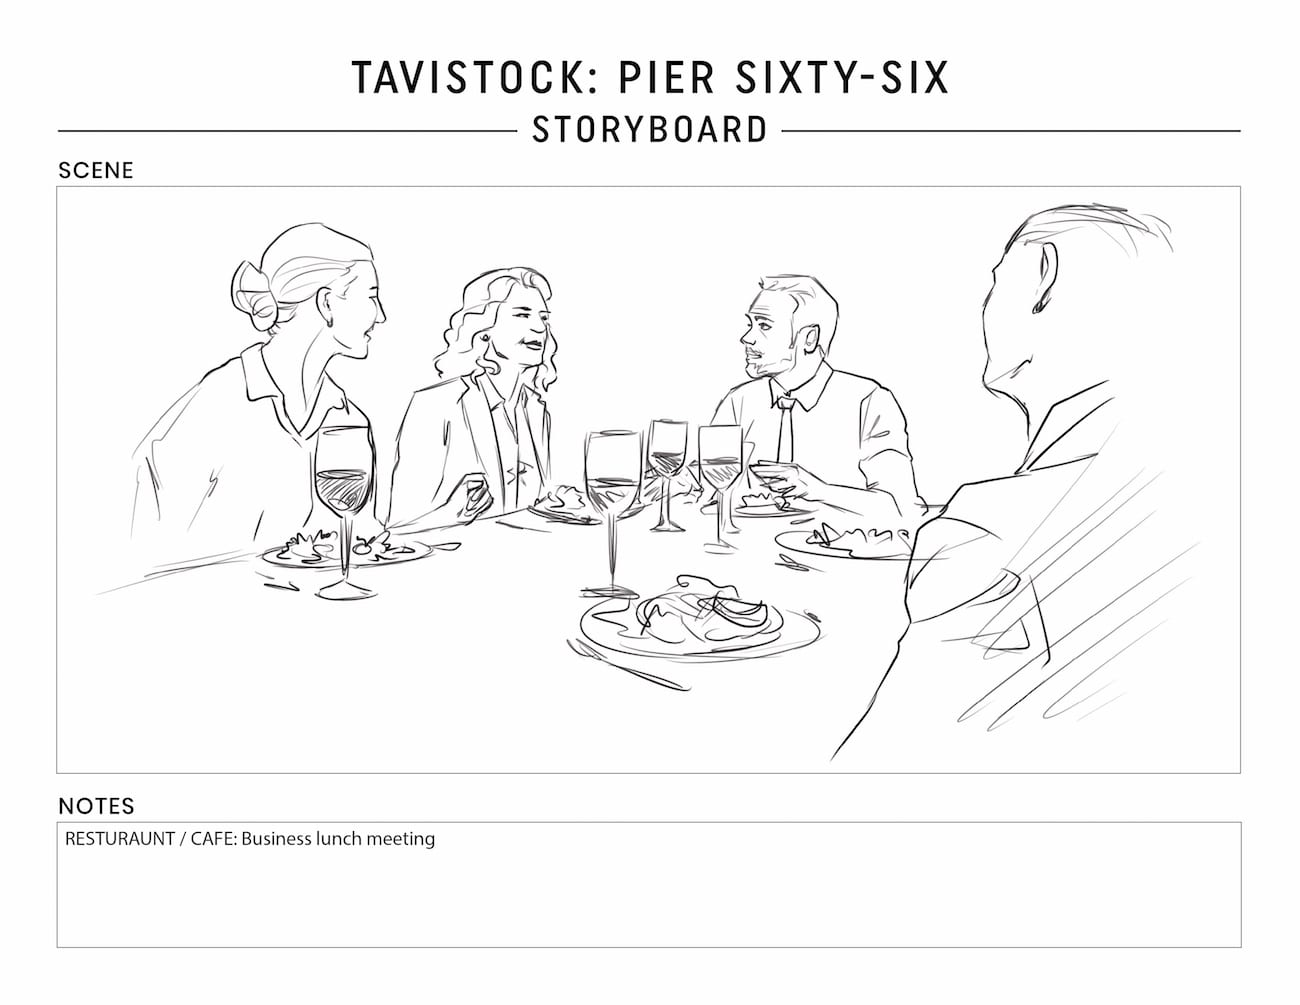 Tavistock Development Company C&I Studios Marketing Solutions Pier Sixty Six Storyboard Restaurant business lunch meeting